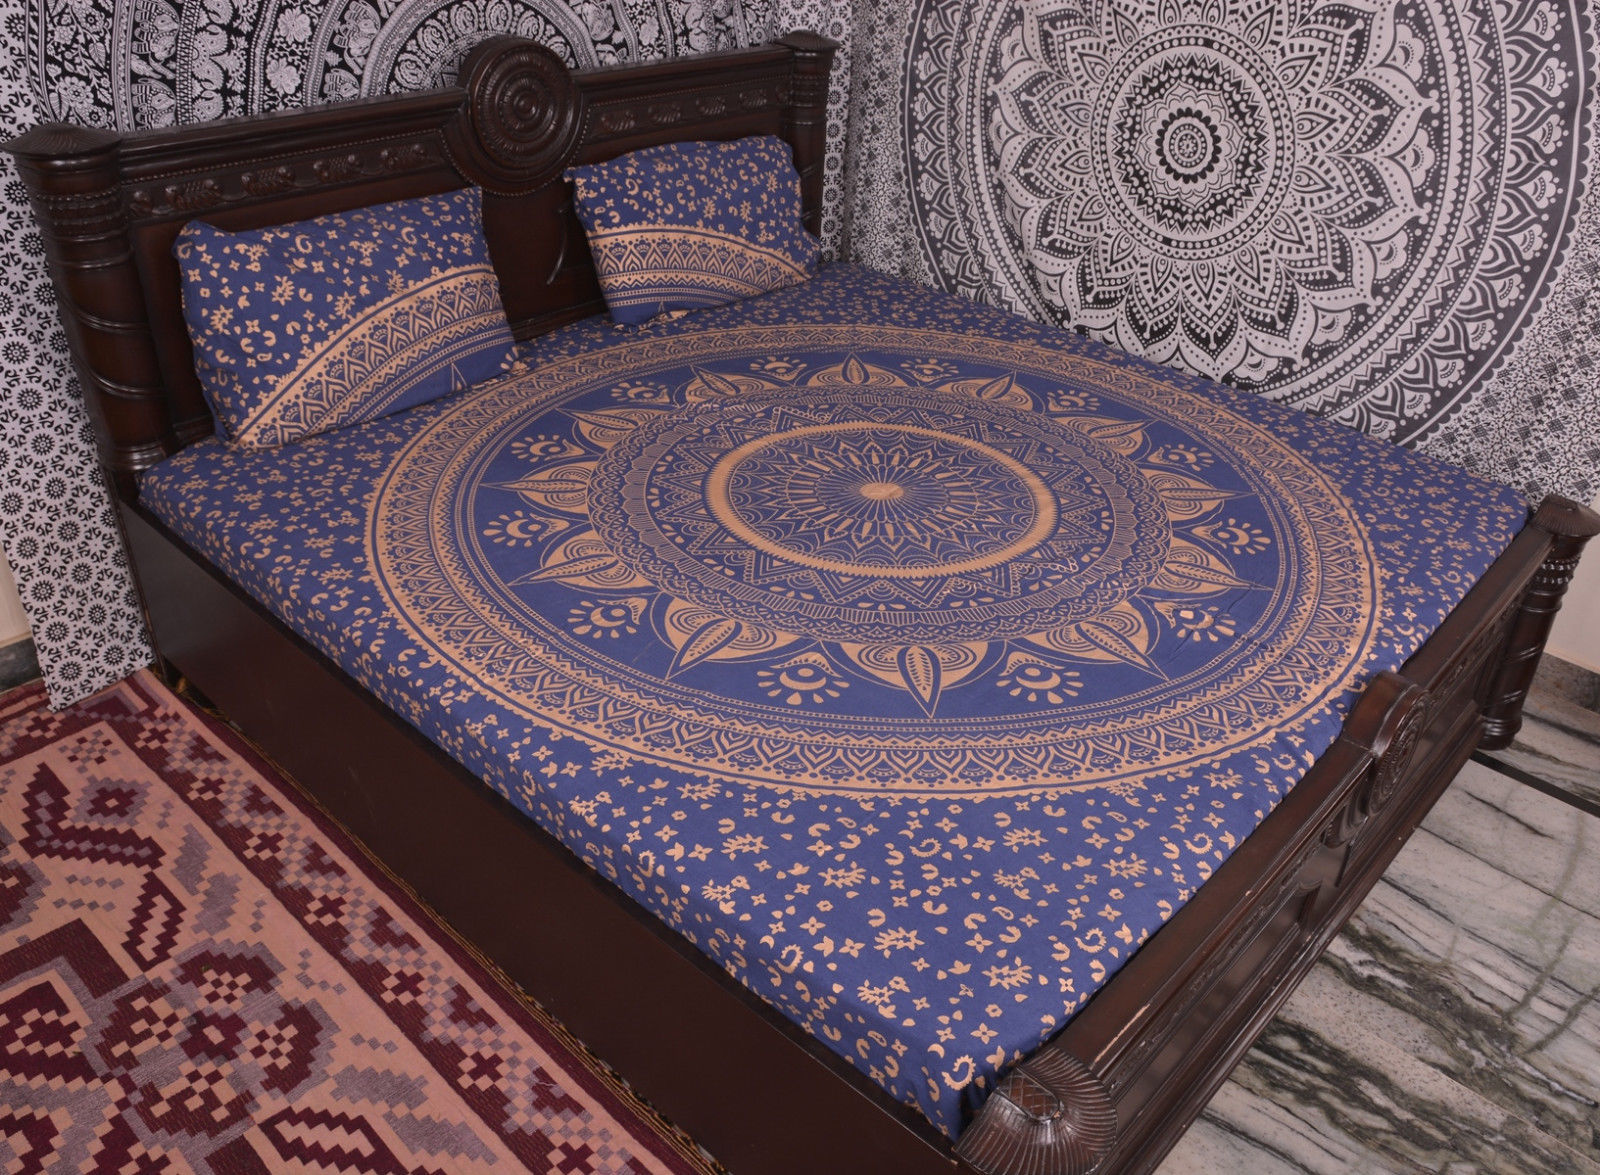 Indian Mandala Blue Round Cotton Duvet Cover